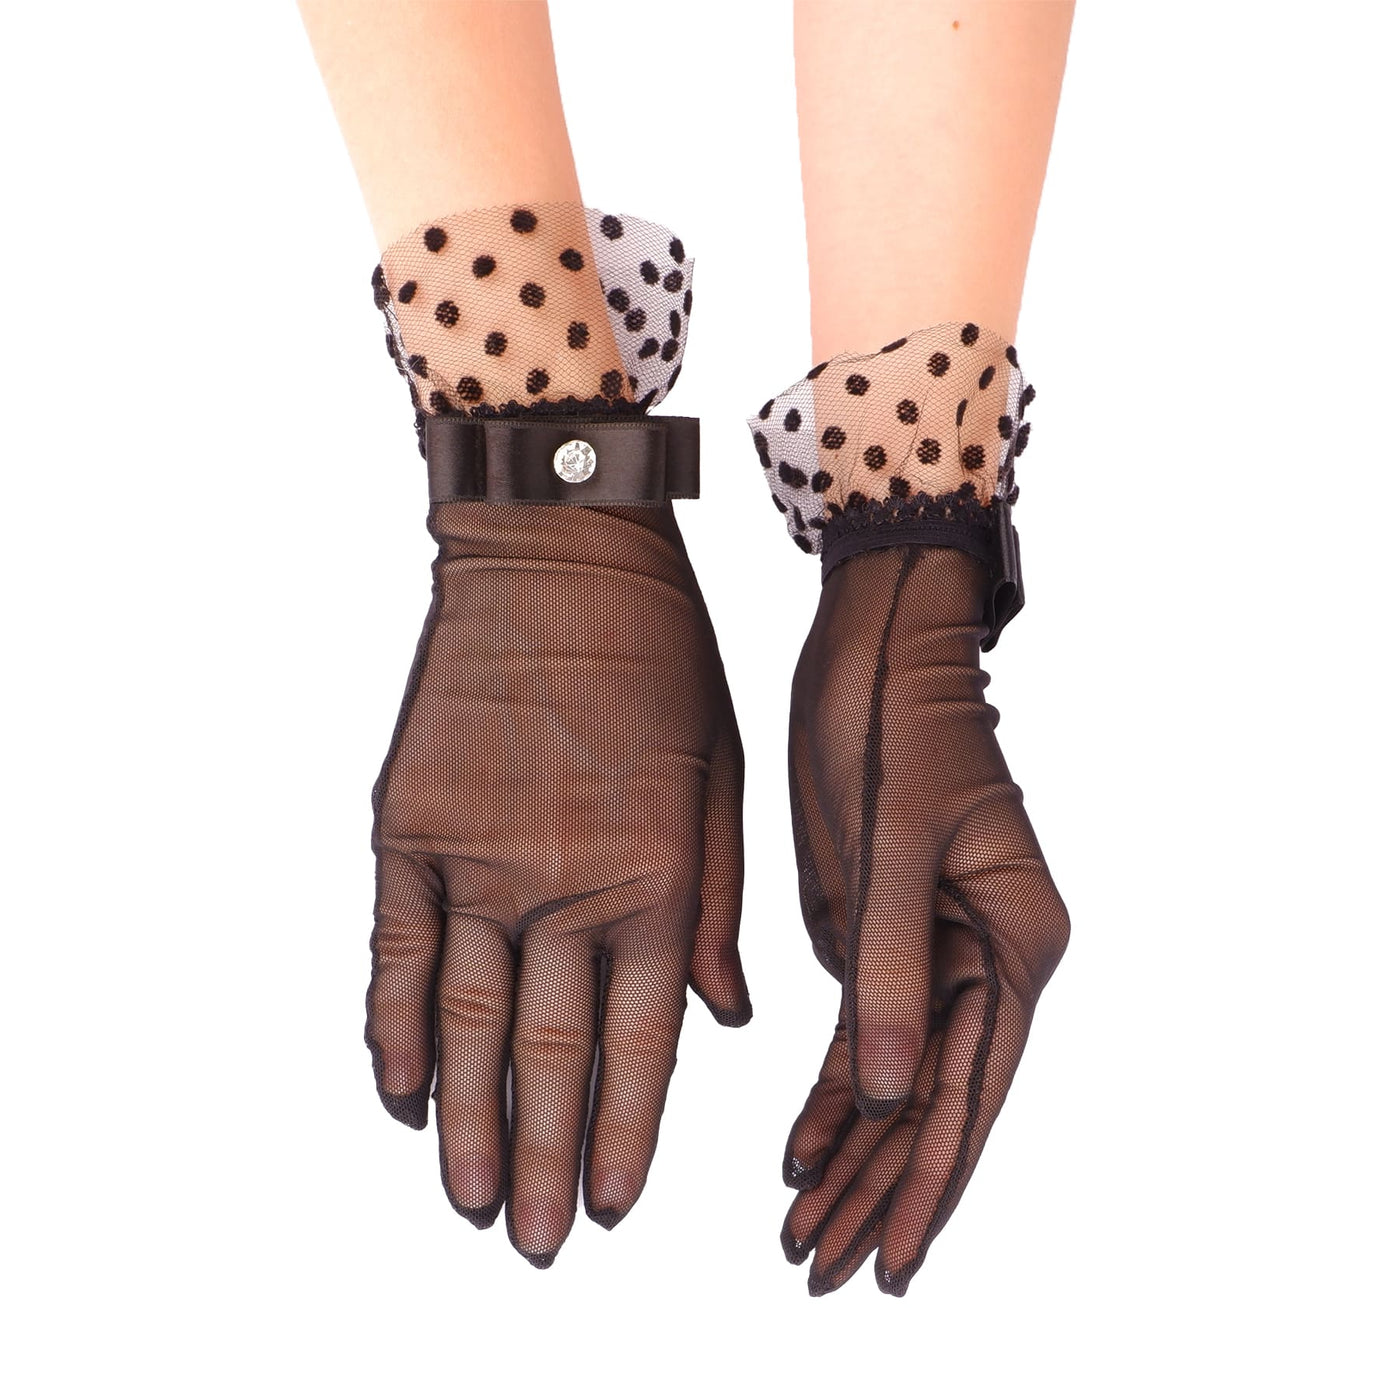 Polka Dot Bridal Gloves Ribbon Detailed Wedding Costume Gloves Women's Henna Night Gloves